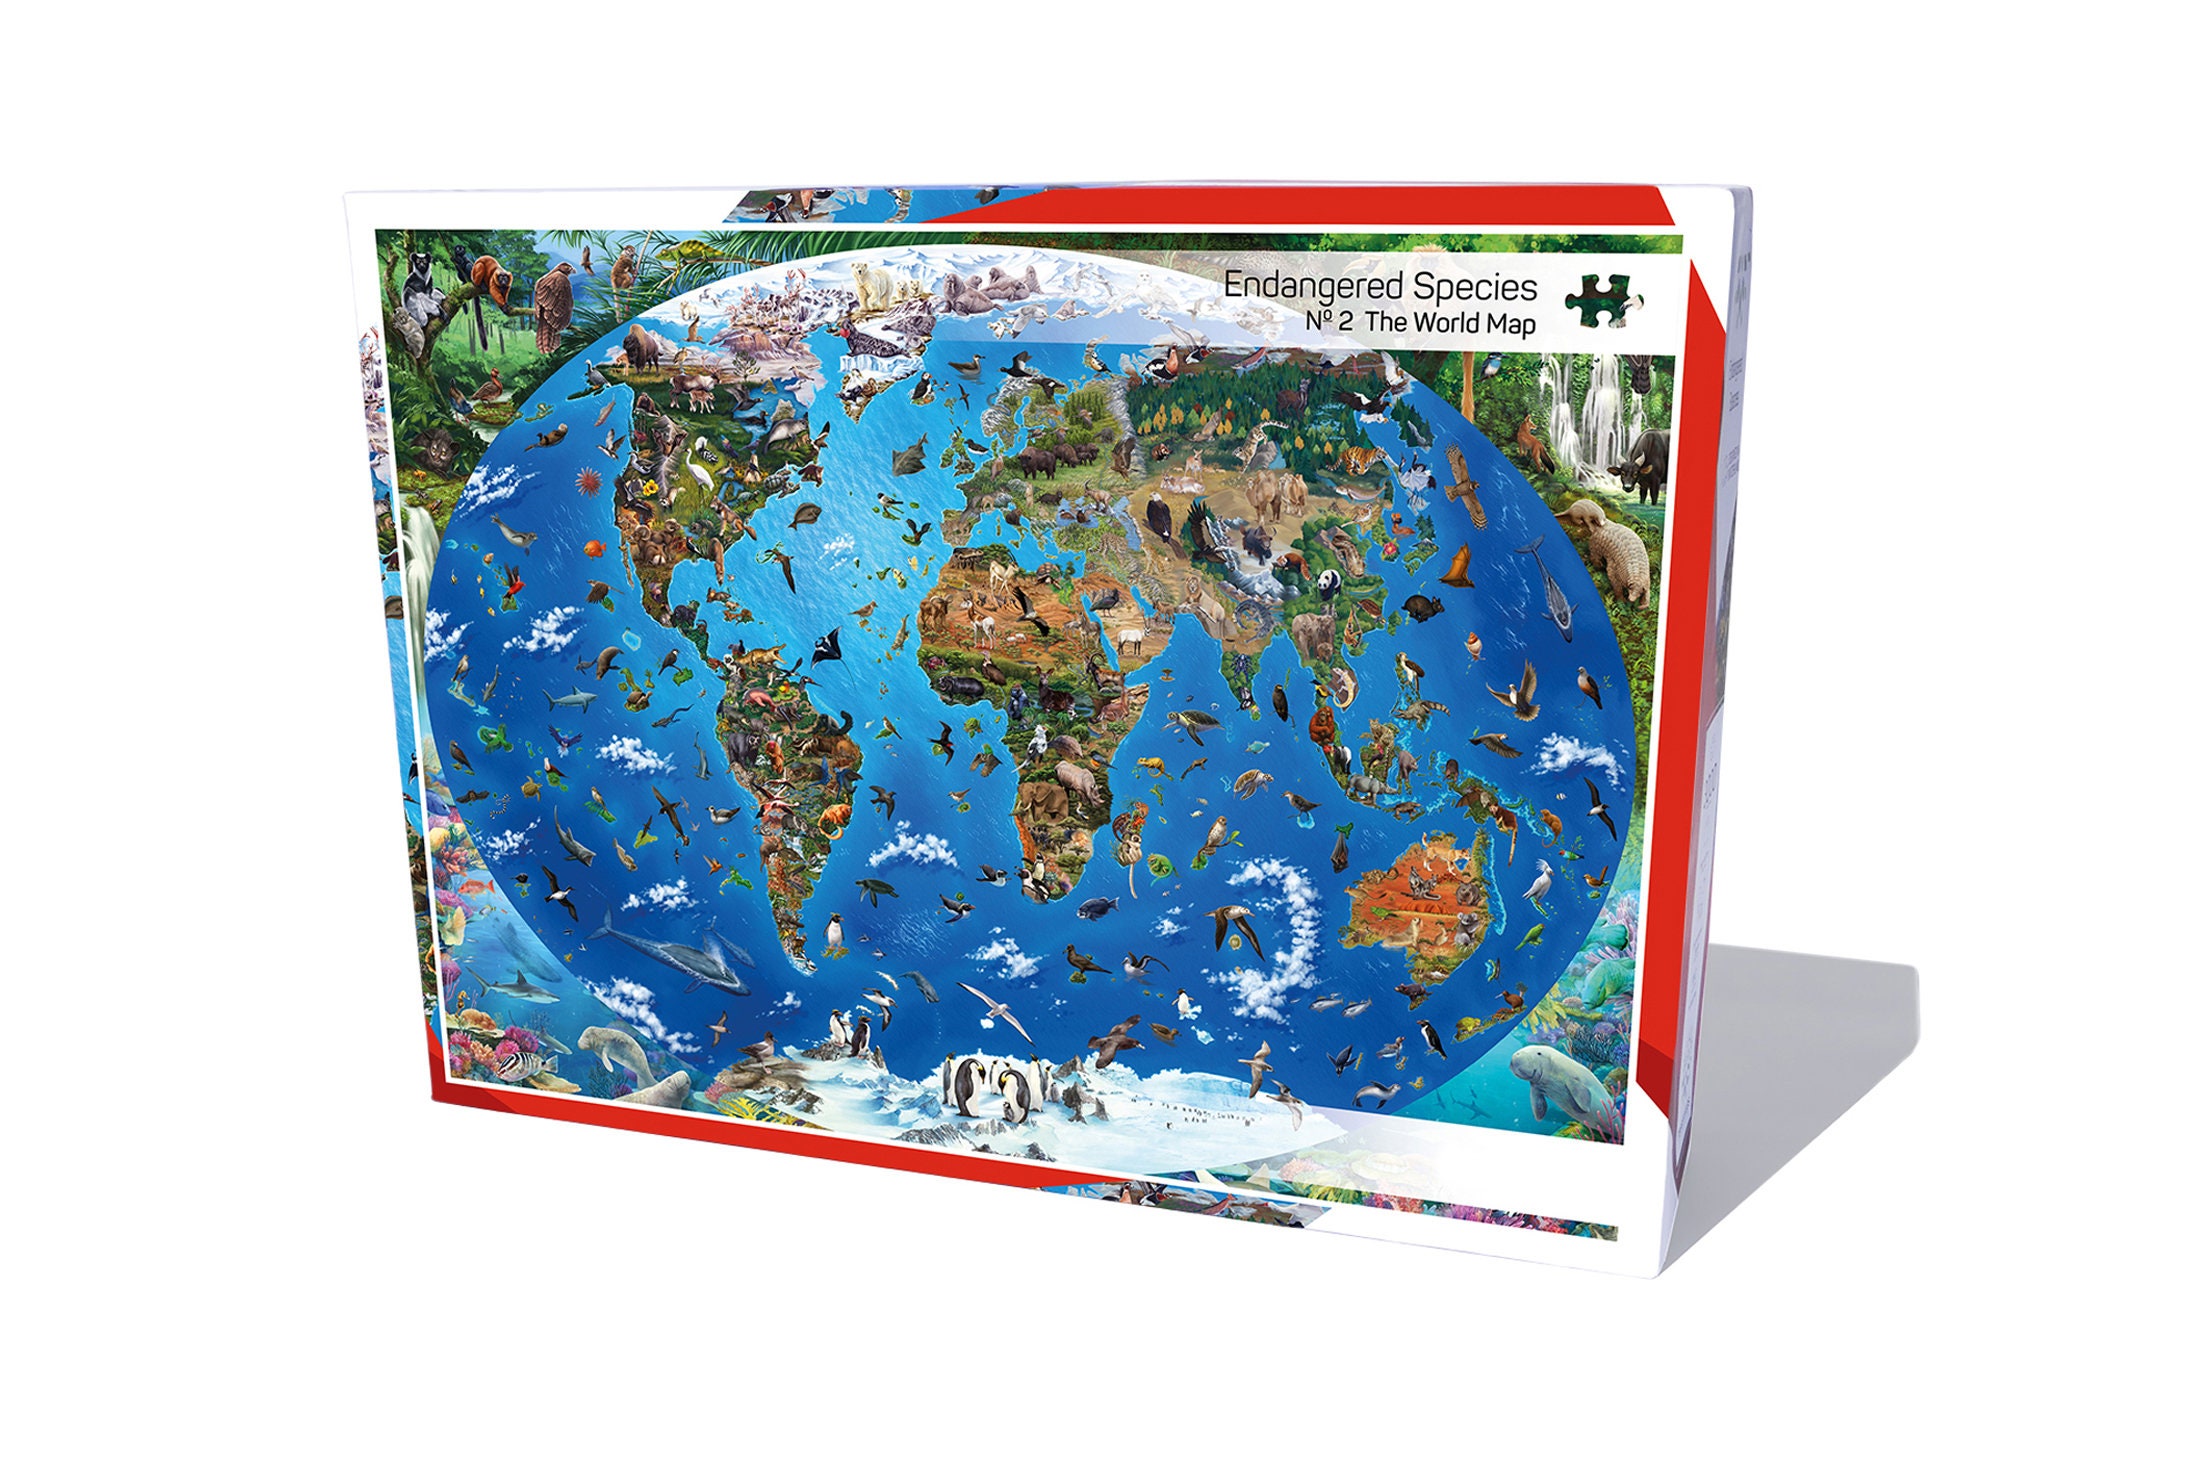 3000, Trefl, World Map - Rare Puzzles